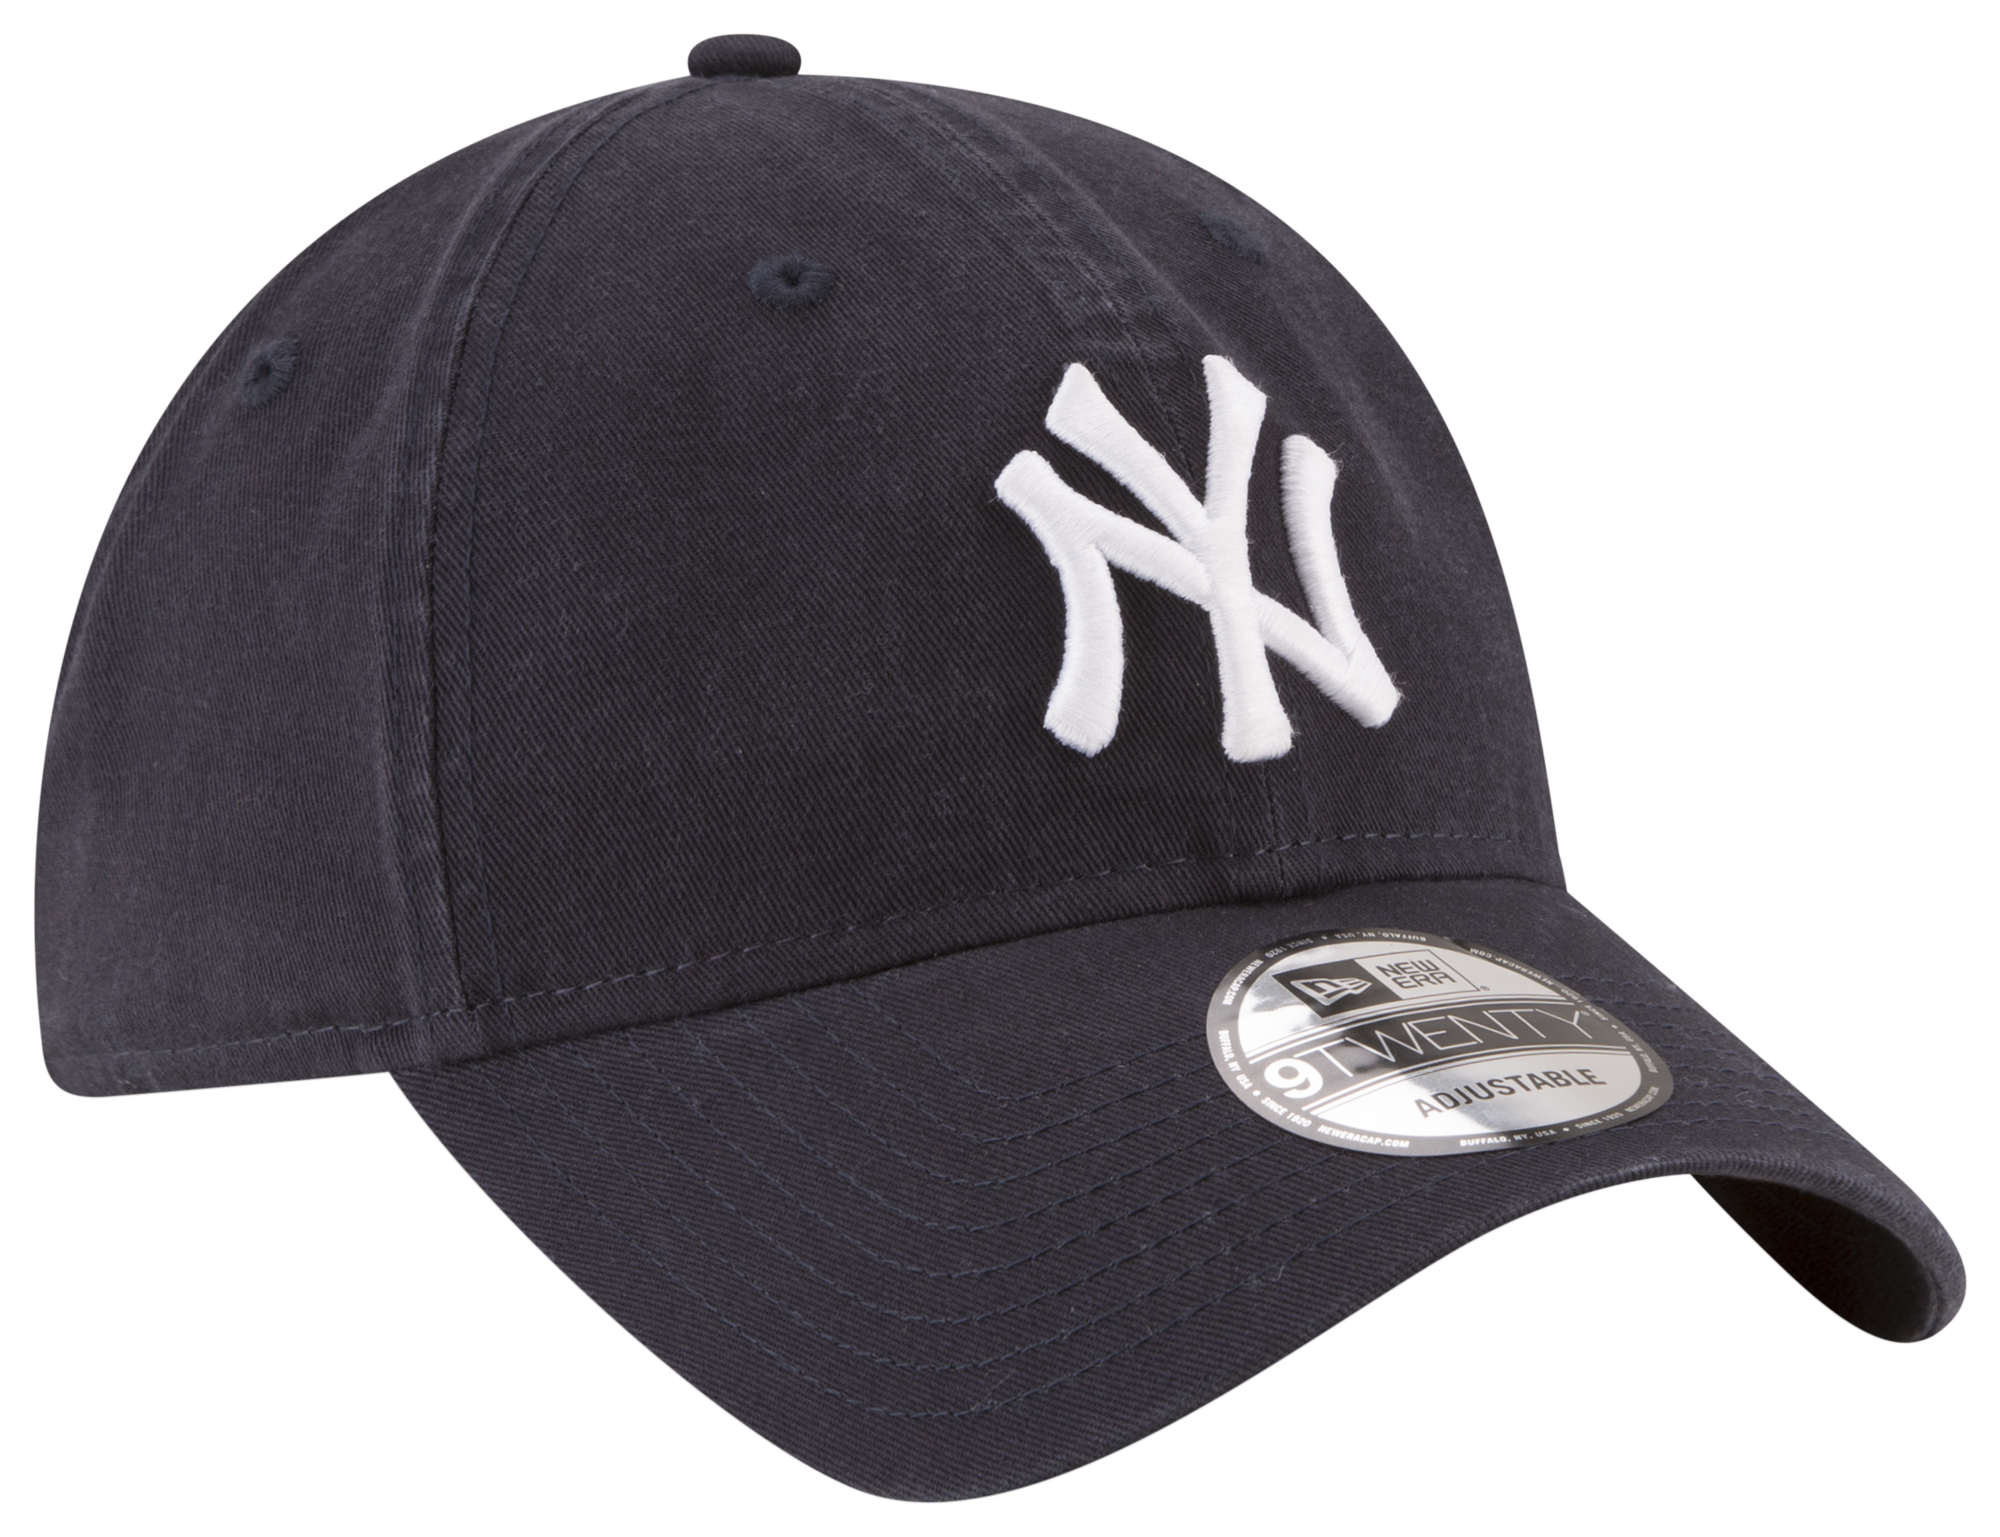 New Era Yankees Core Classic 920 Adjustable Cap